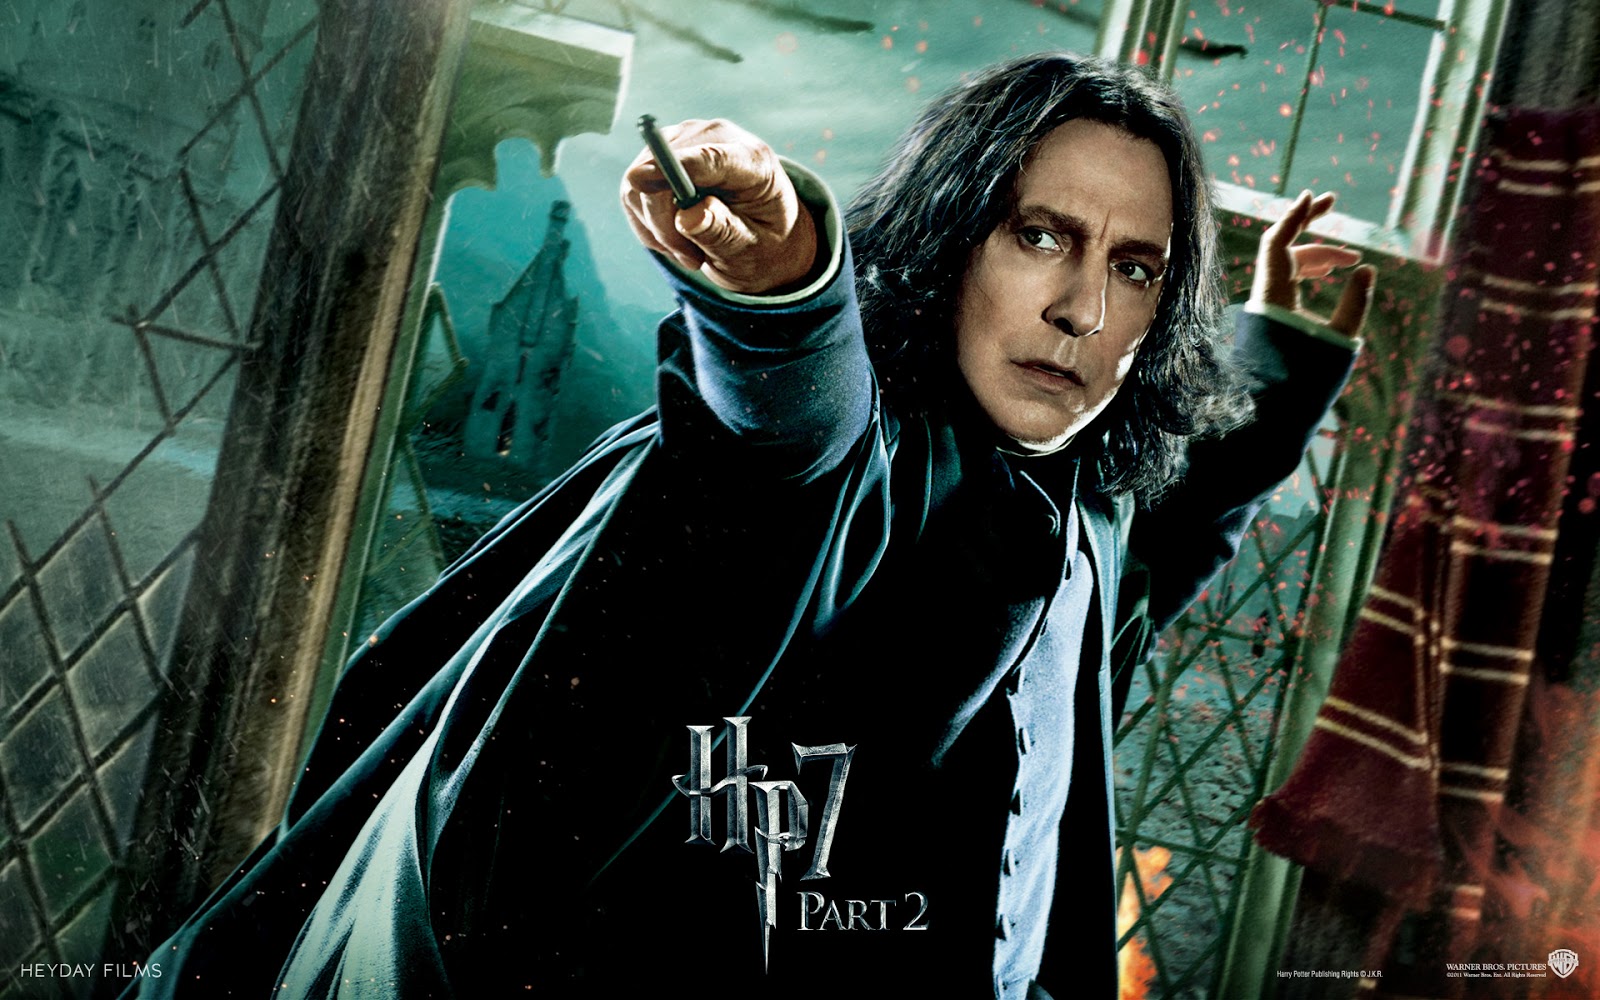 https://blogger.googleusercontent.com/img/b/R29vZ2xl/AVvXsEj-sPMzqoAeJZ_pyeI2816ACCRuA0LmS9b29WSXz0XkK67CjL8HbQV0ohYLYxKkXiYvMDrOvZGedDsKgxN5D7snrGlAHRaryjRV5RAXWEgeZ3h5BTgl0ZAOb0R67EKmSbMrjCyaLQQclhU/s1600/Harry-Potter-BlogHogwarts-HP7-Wallpaper-08.jpg